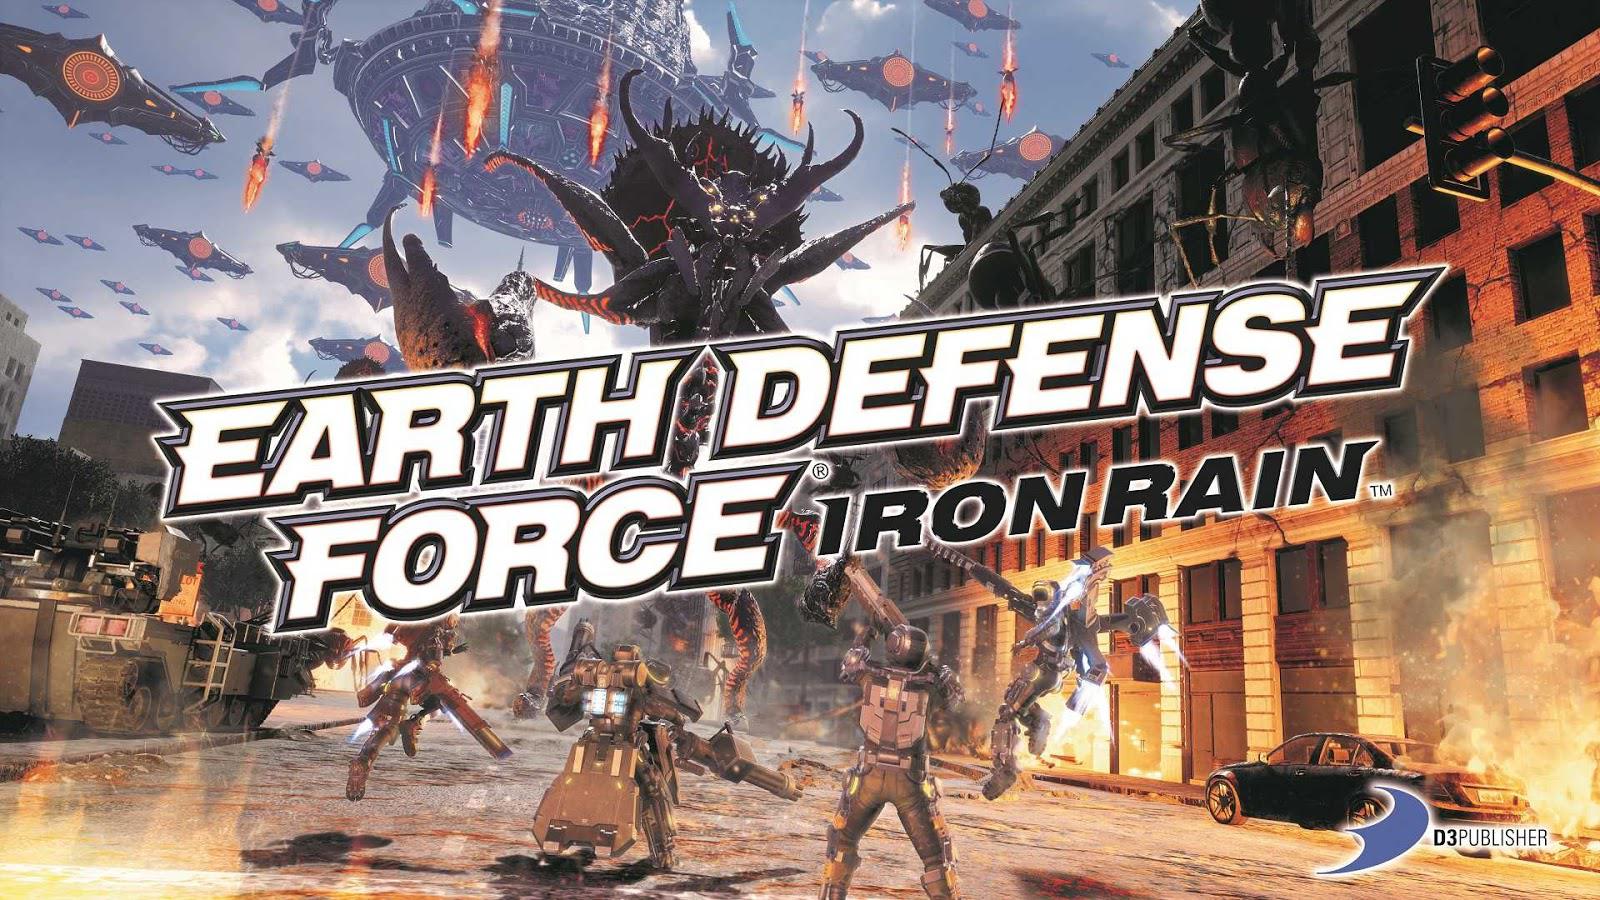 Earth-Defense-Force-Iron-Rain